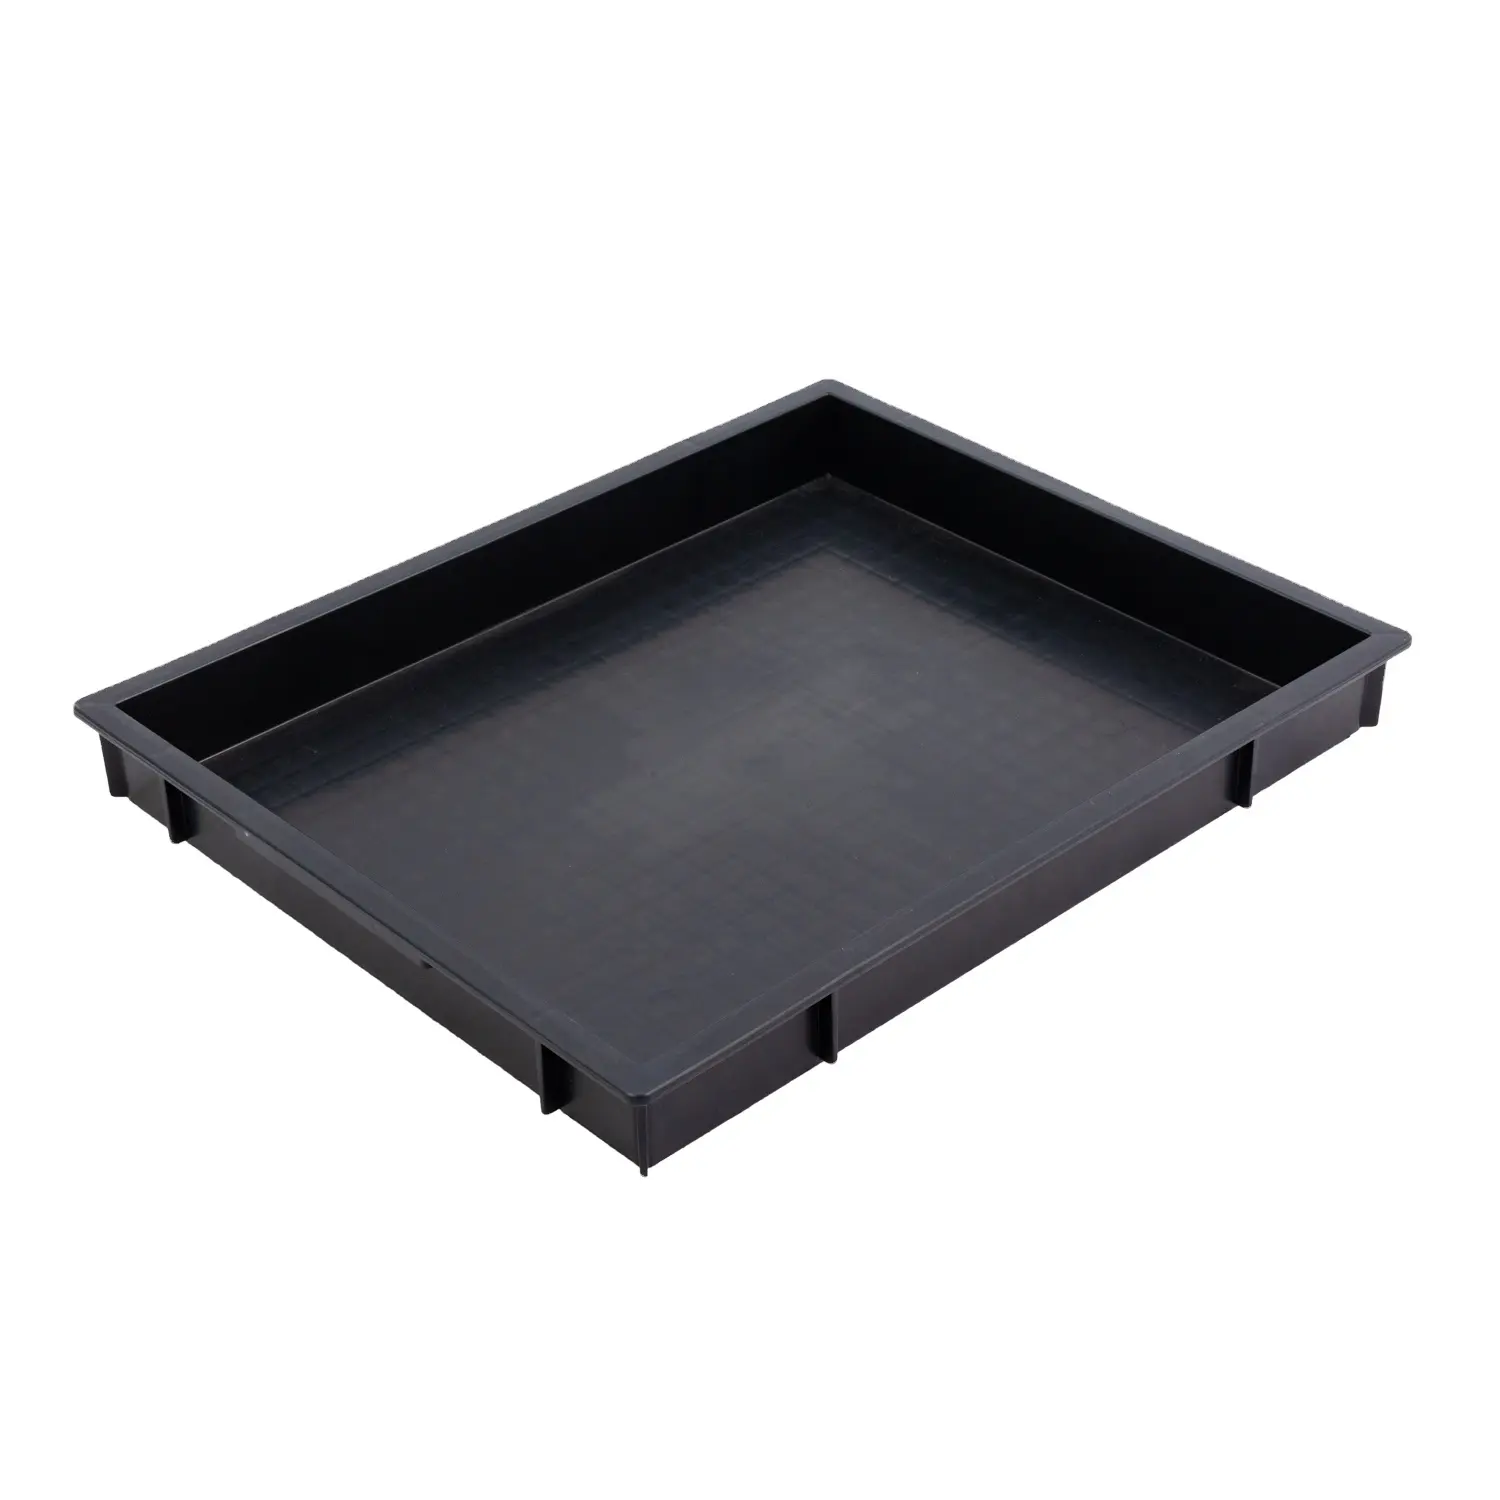 LN-1522121 PCB Lagerung Container PP Kunststoff Antistatischen ESD Tray/Schwarz ESD Verpackung Tablett